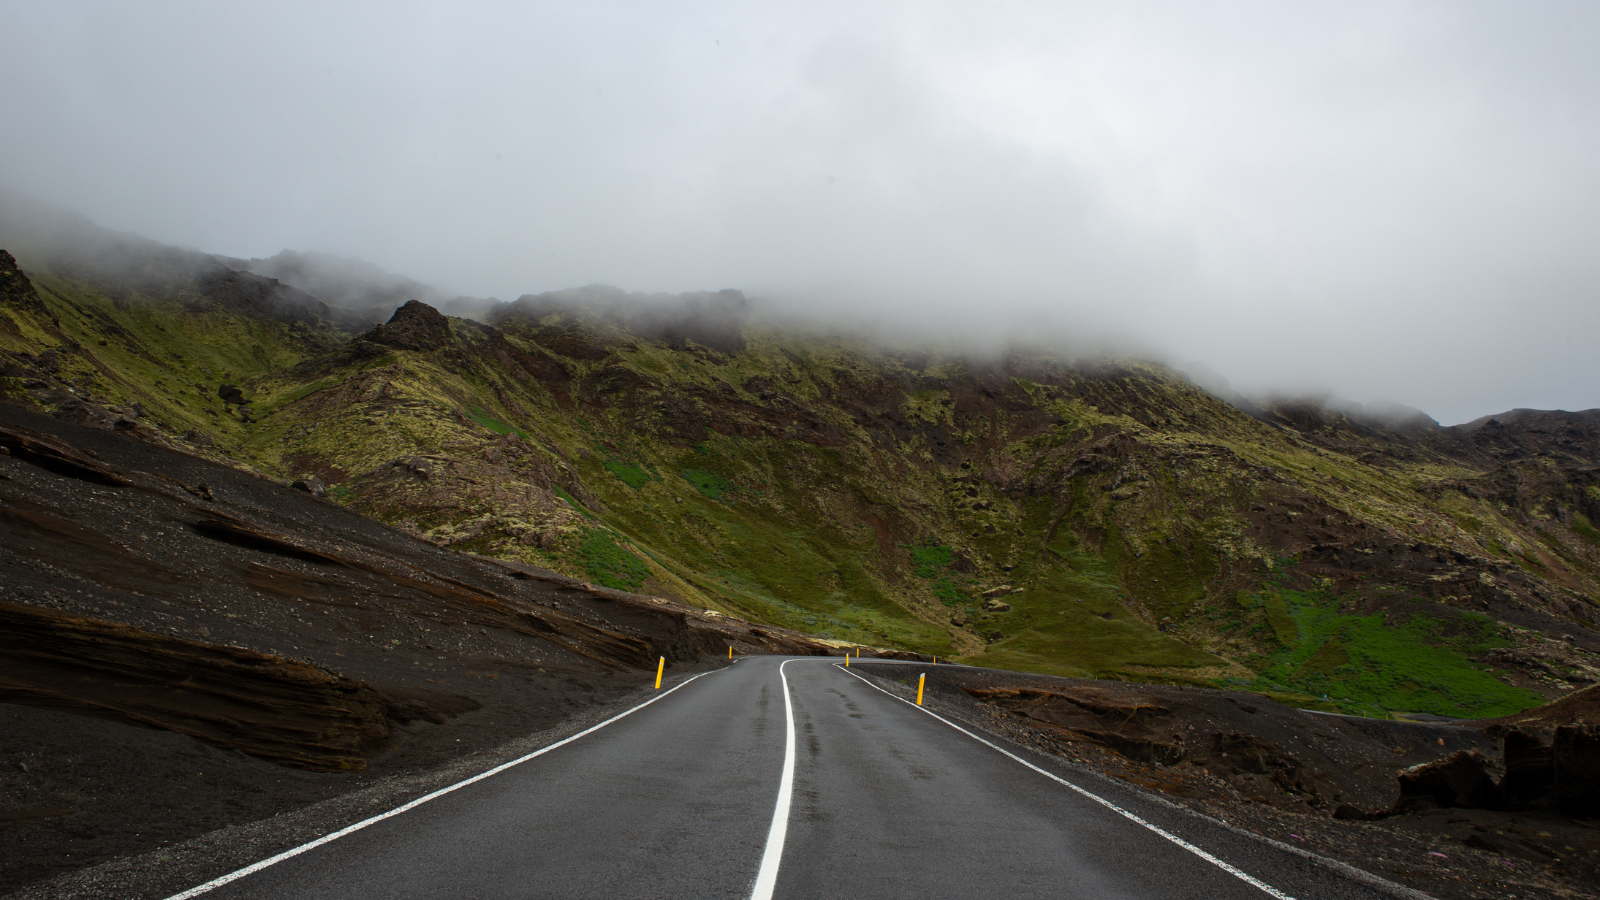 Road winding through a mountainous area of Iceland.